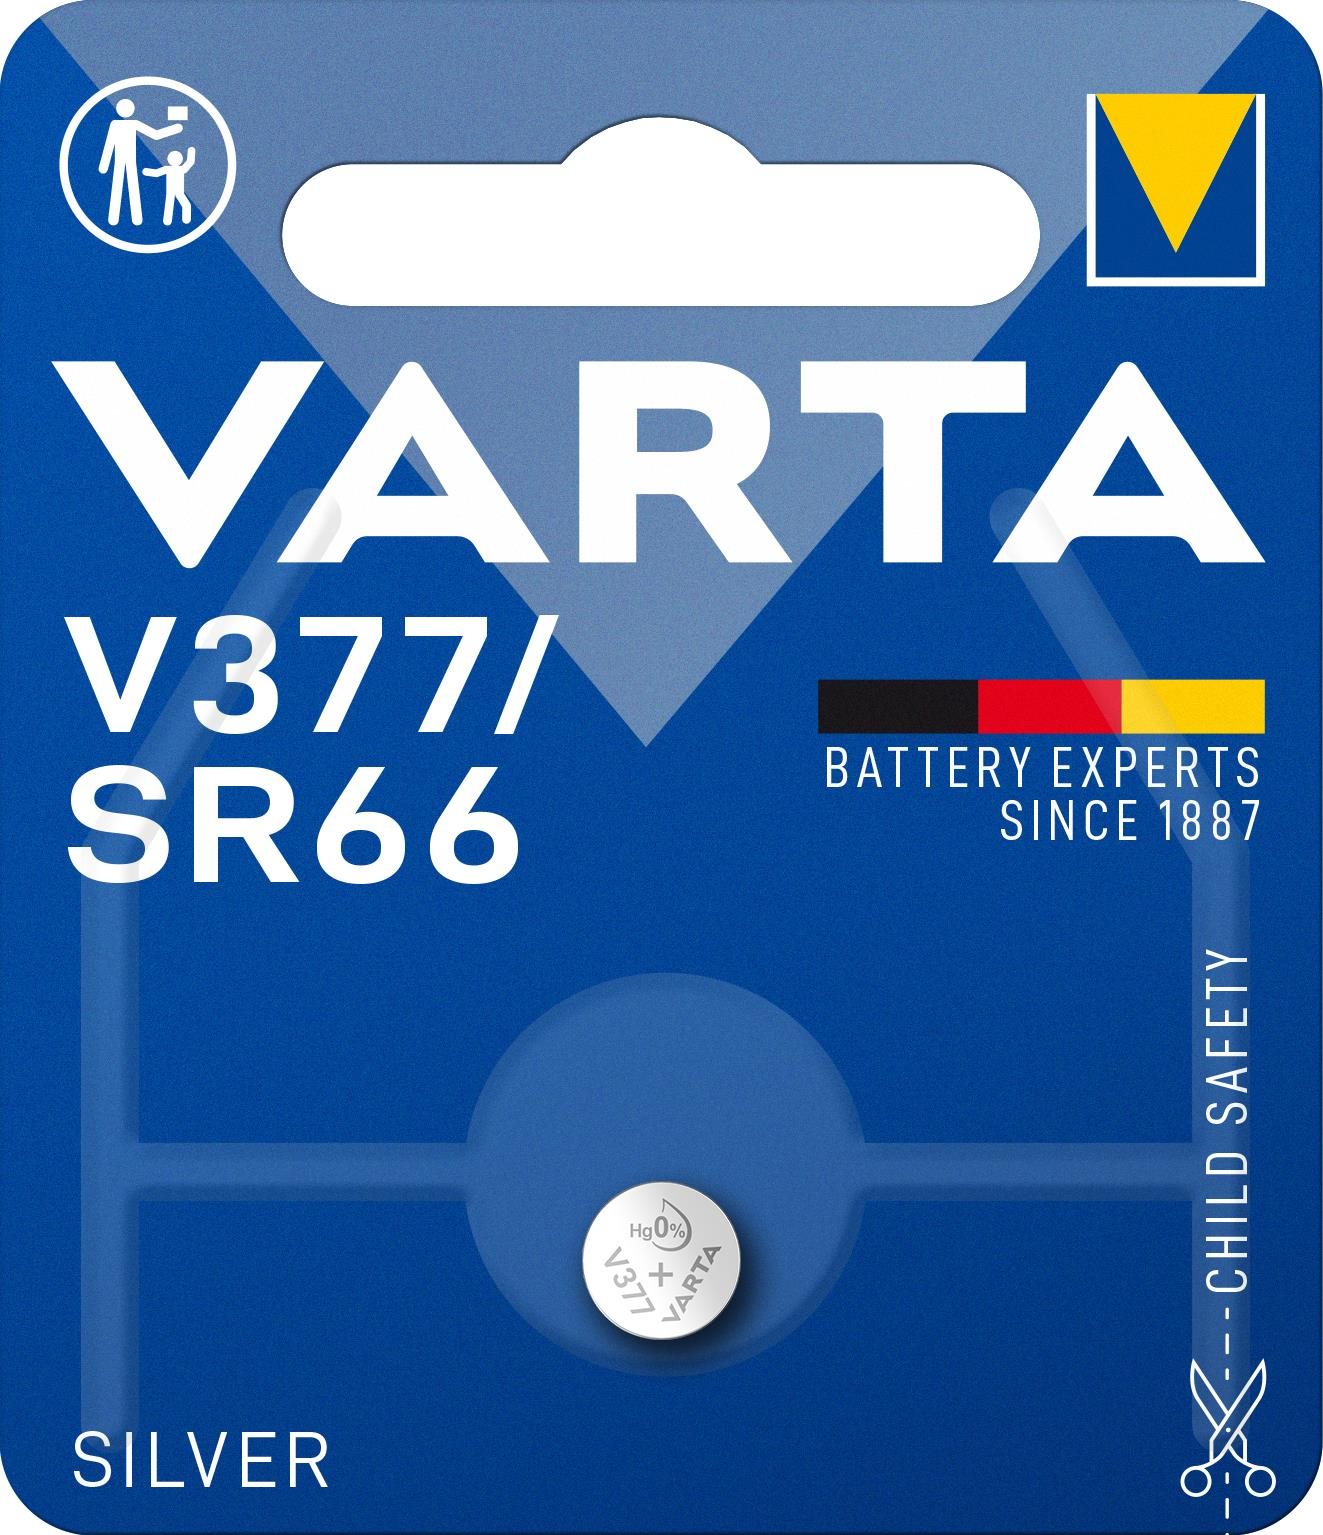 VARTA Speciális ezüst-oxid elem V377/SR66 1 db